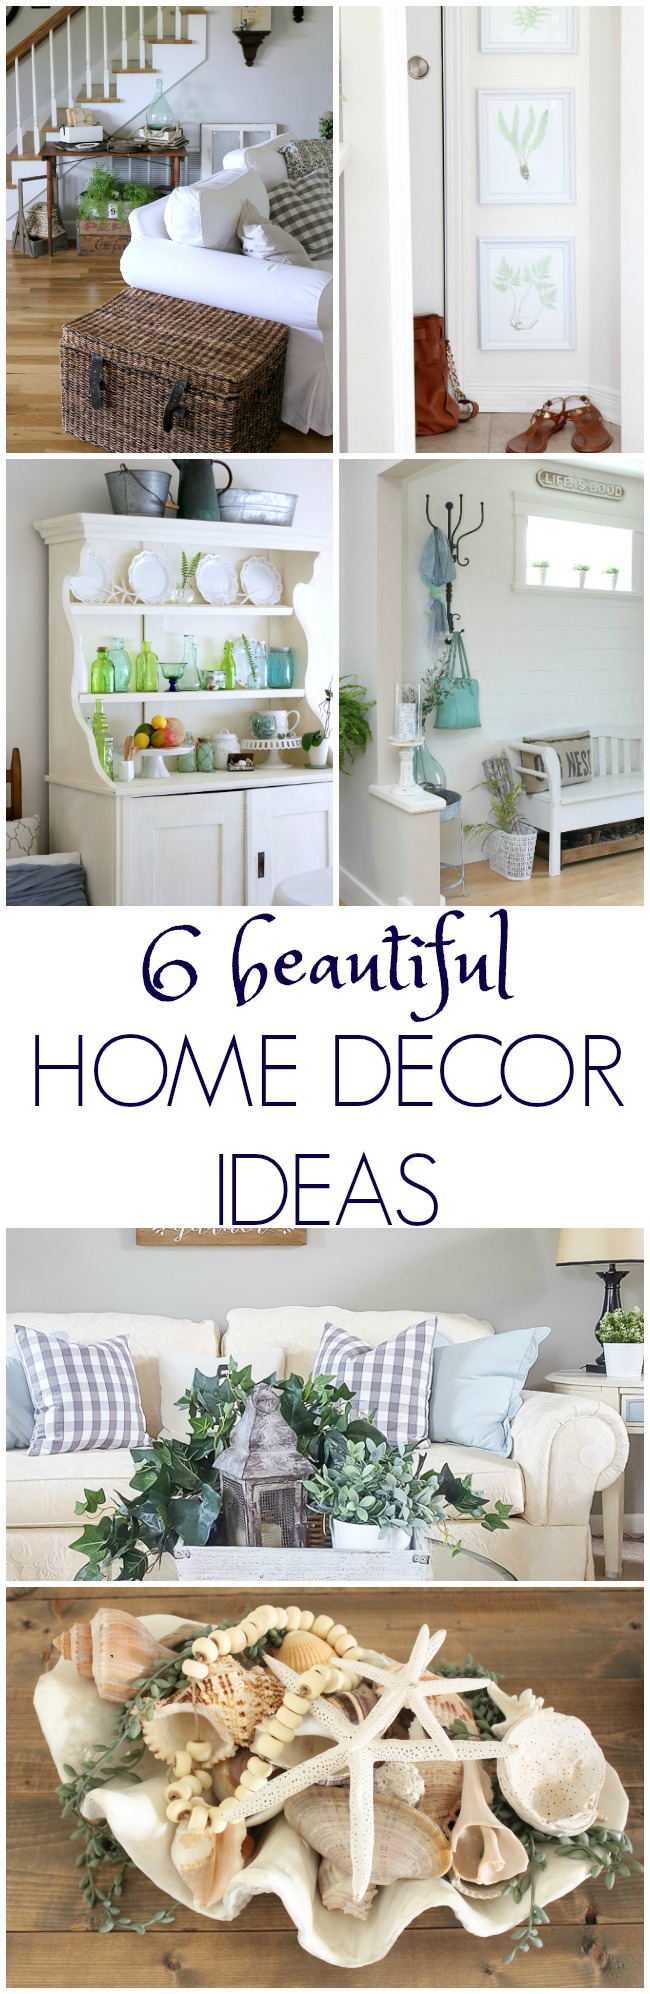 6 Beautiful Home Decor Ideas poster.